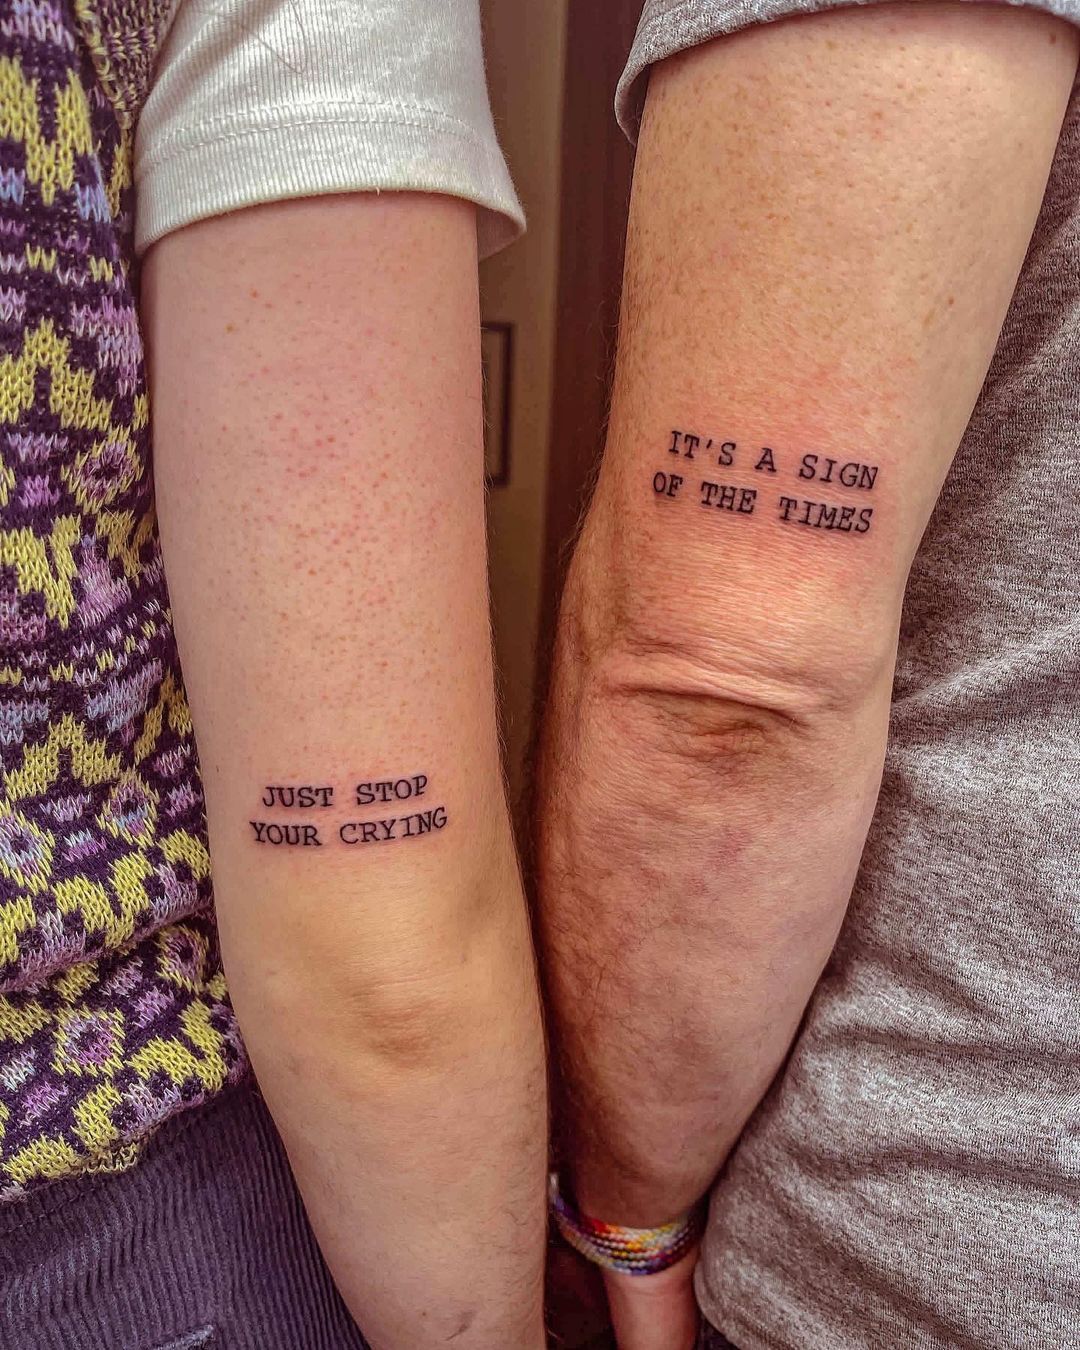 fatherhood tattoo quotes